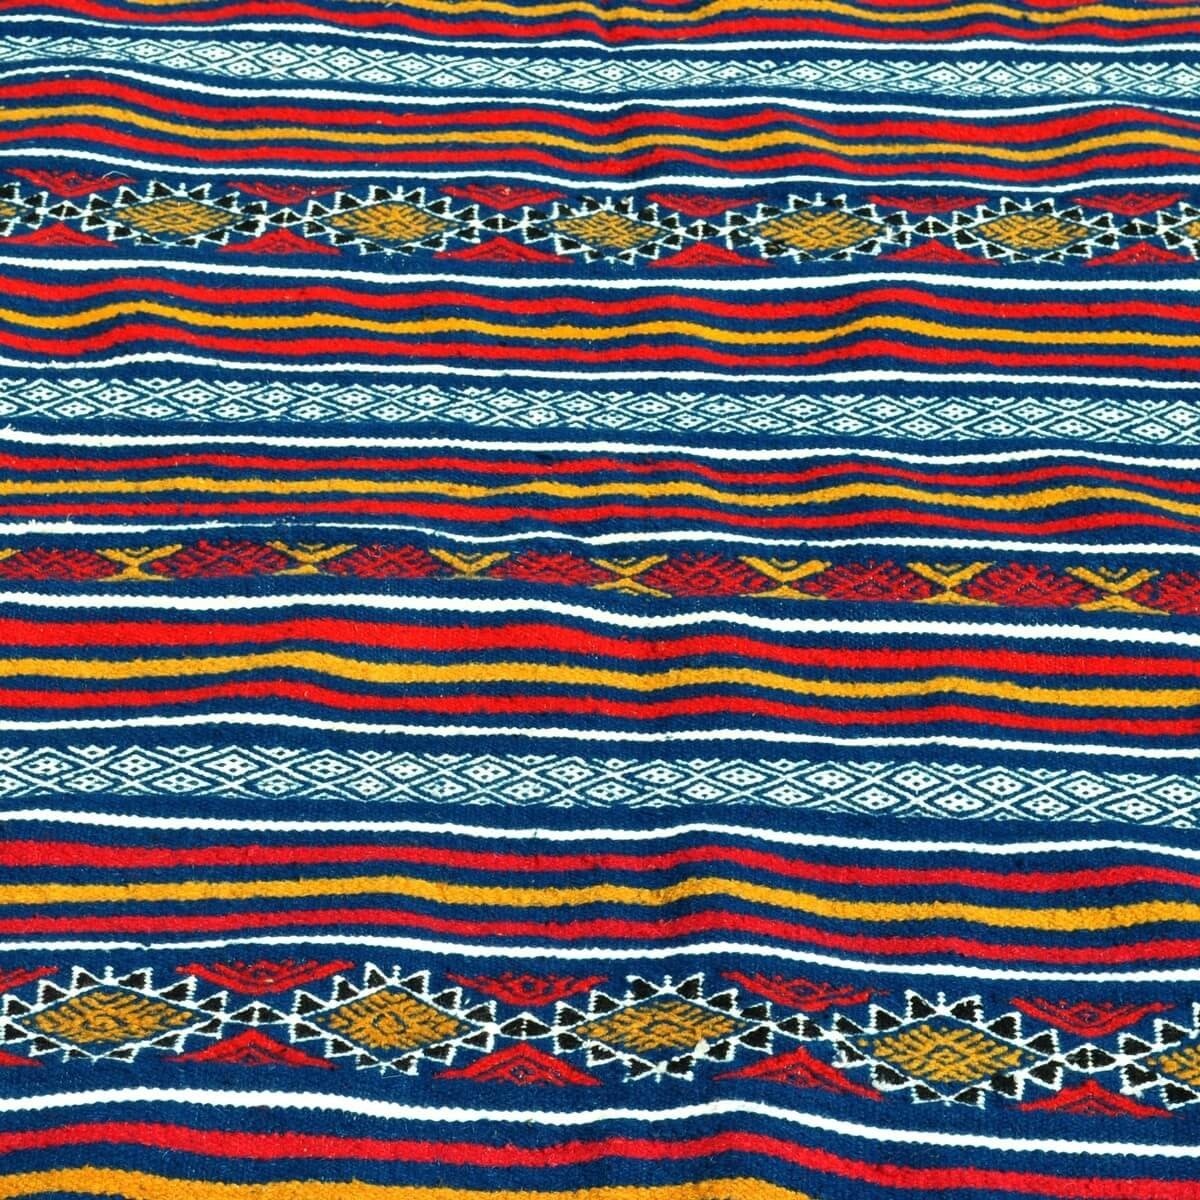 Berber tapijt Tapijt Kilim Moknine 135x230 Blauw/Jeel/Rood (Handgeweven, Wol, Tunesië) Tunesisch kilimdeken, Marokkaanse stijl. 